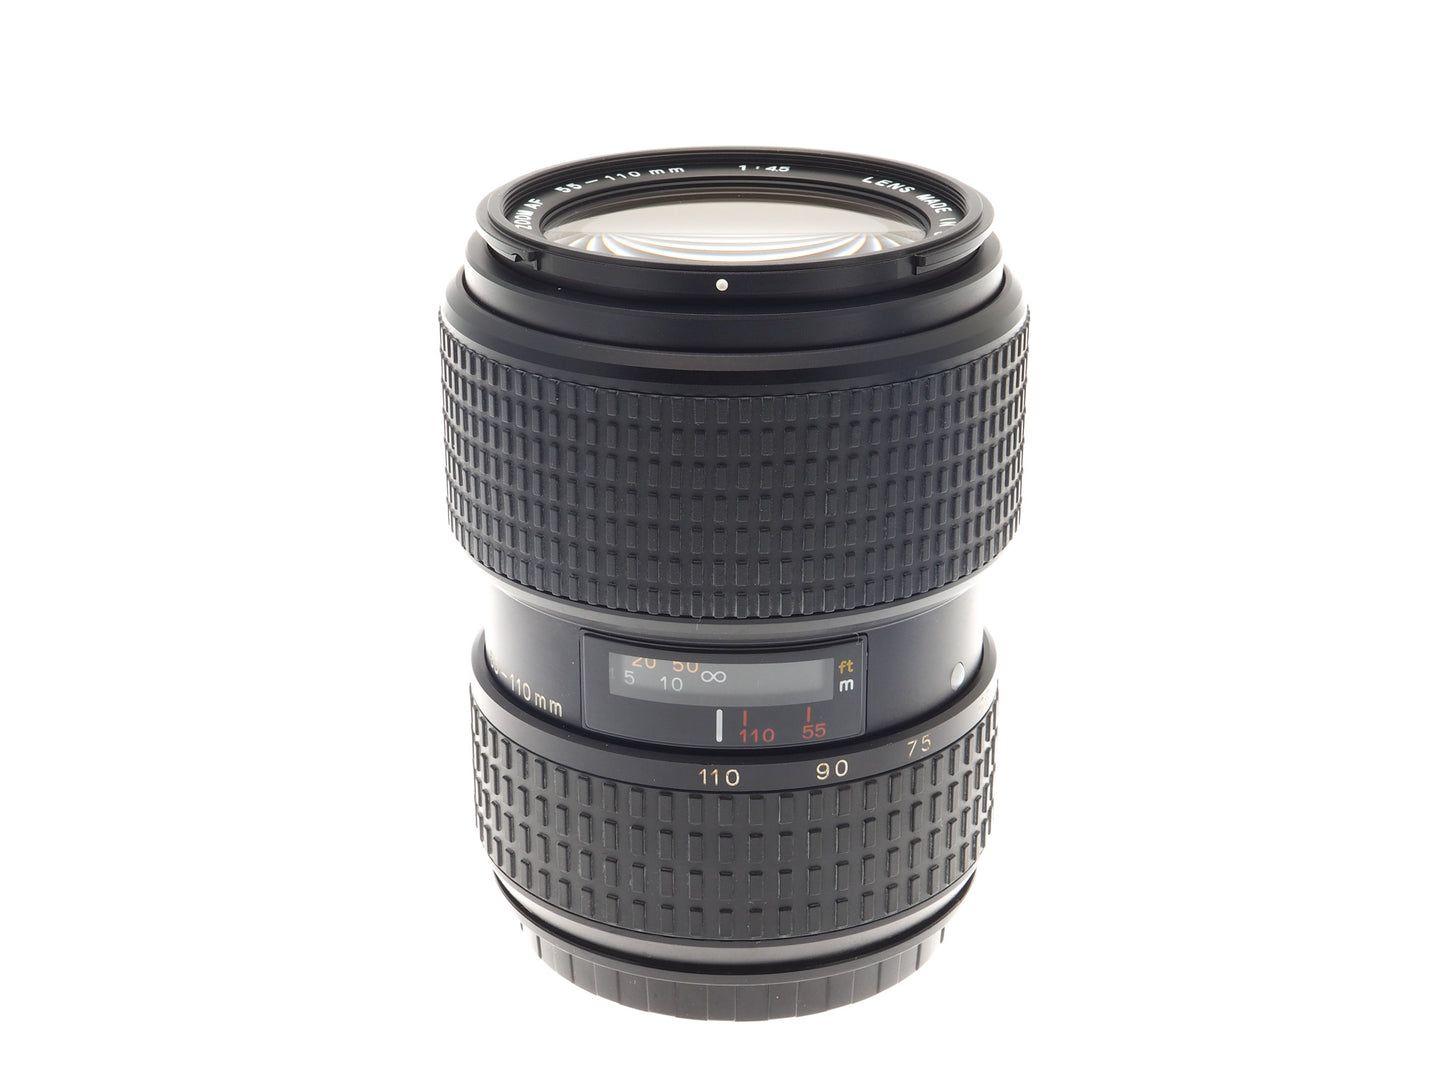 Mamiya 55-110mm f4.5 AF Zoom - Lens